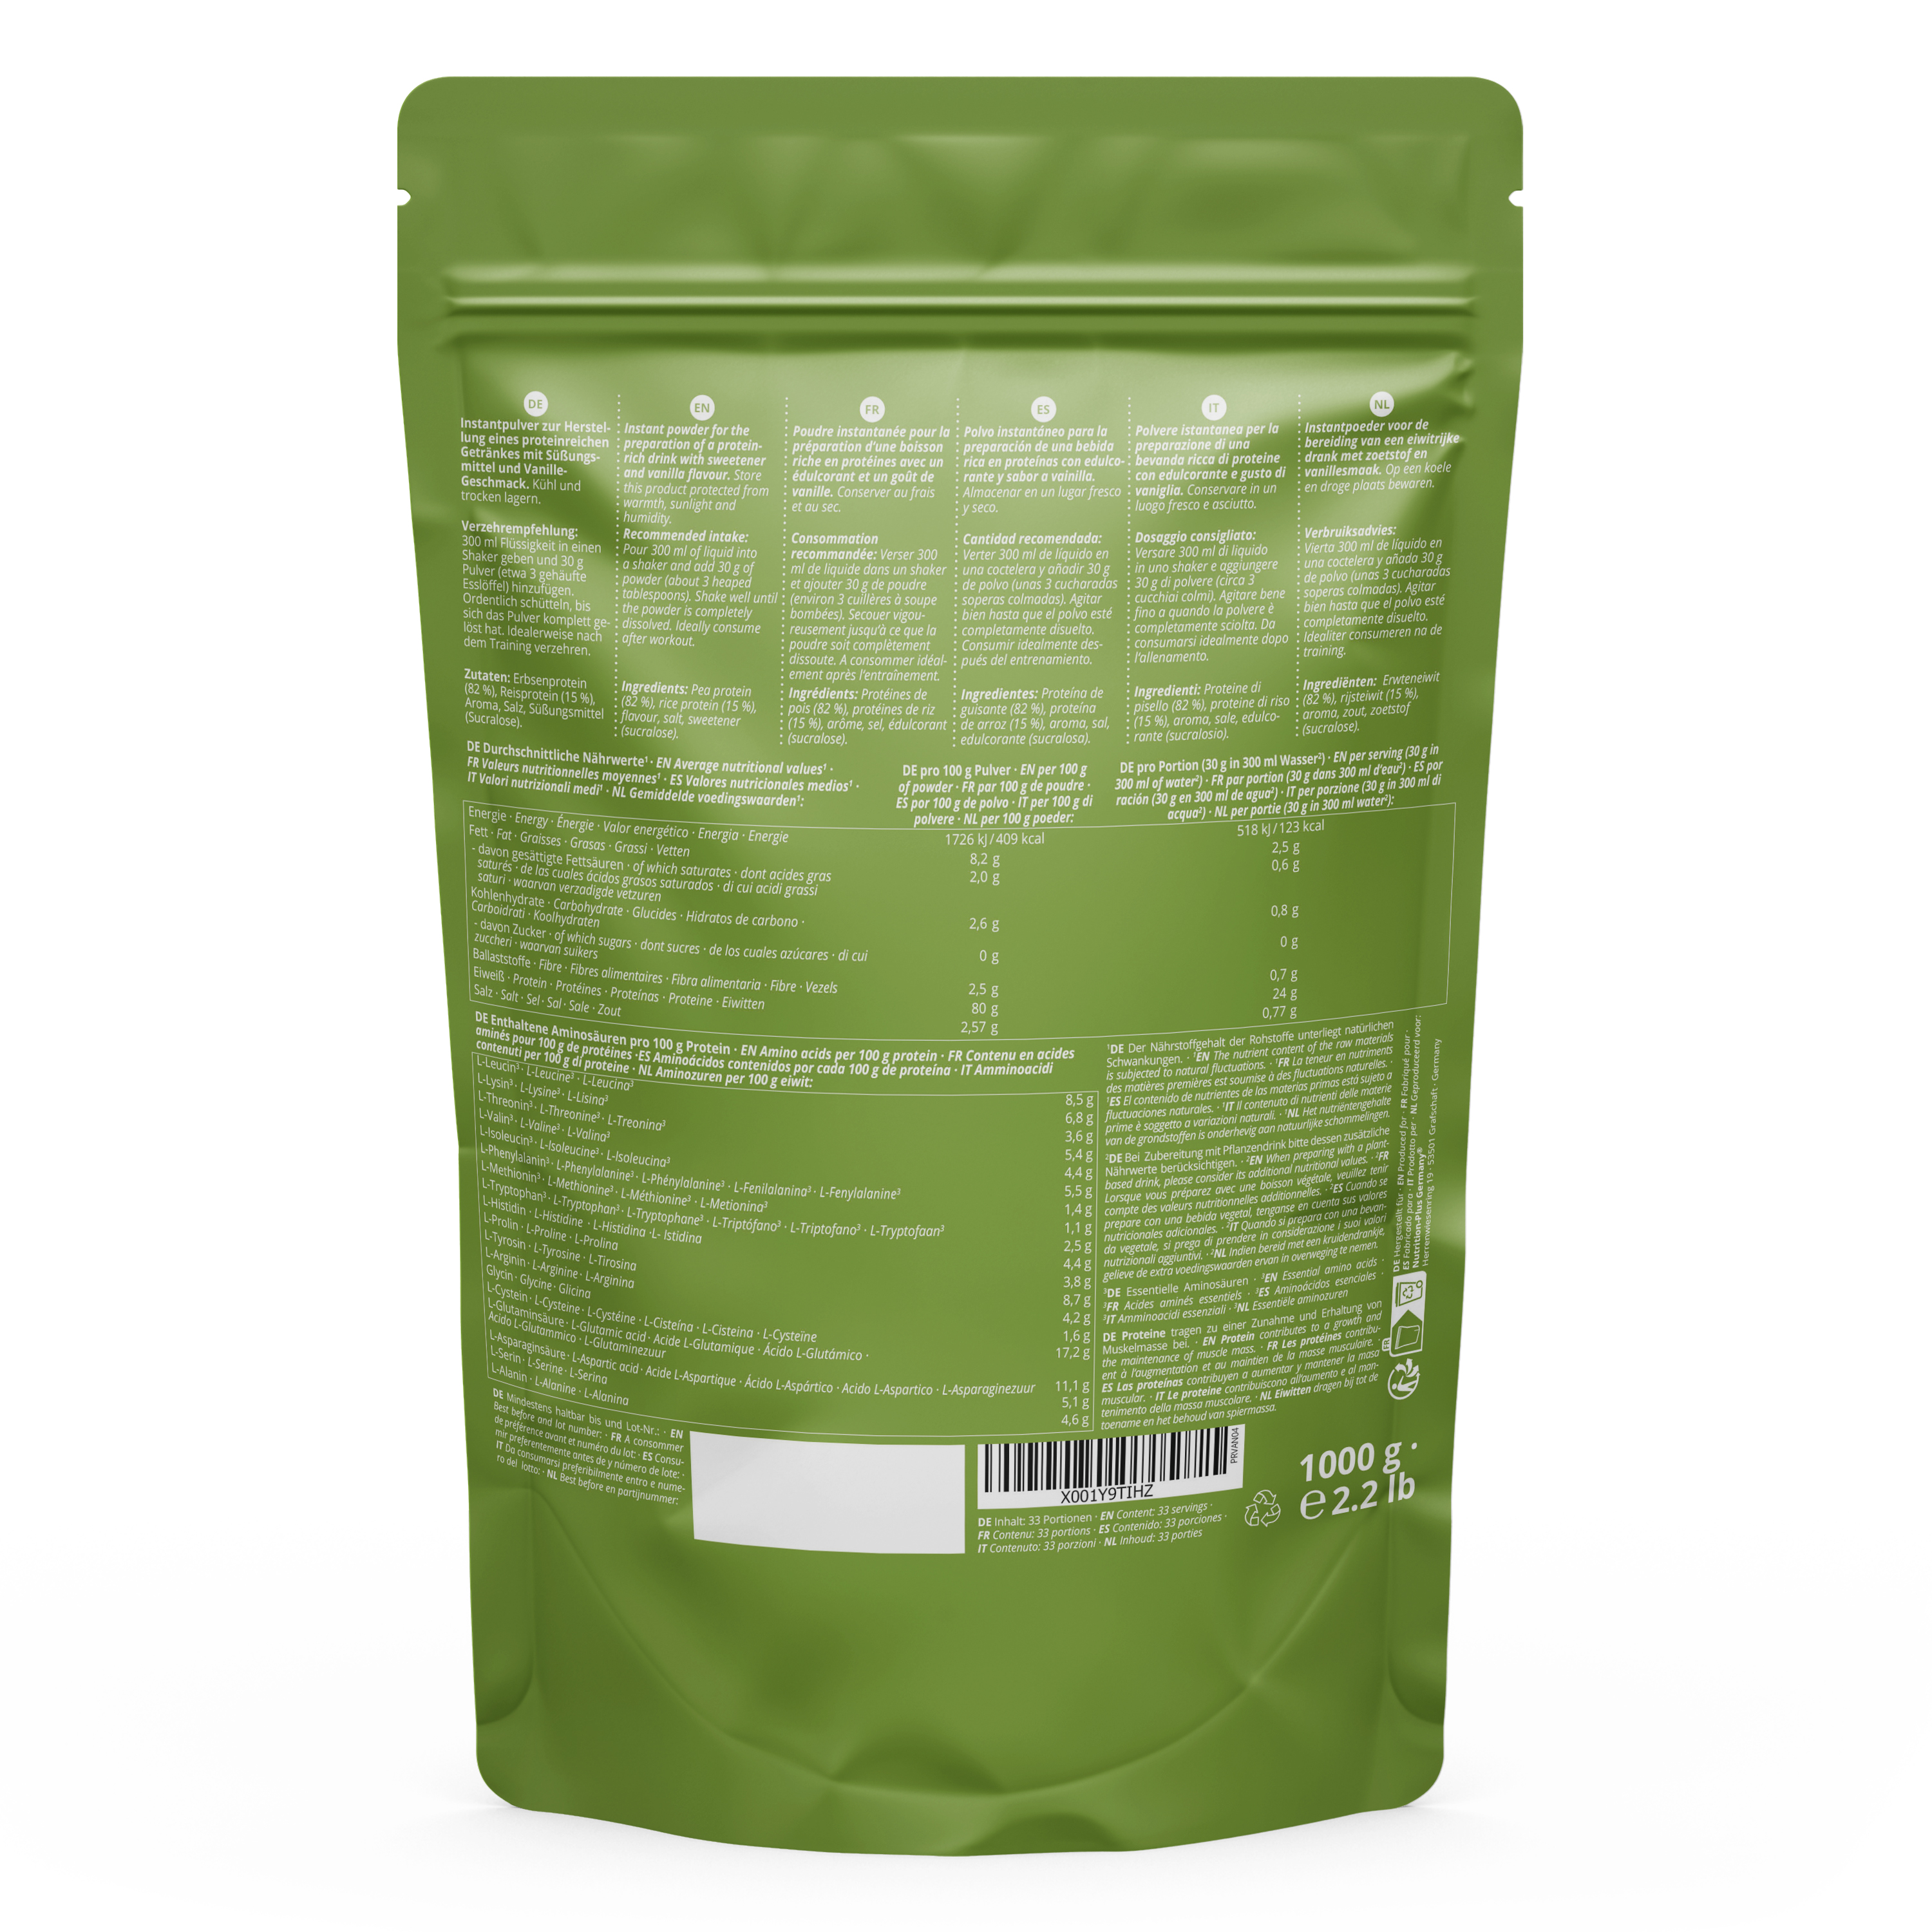 Pea-Rice Proteinpulver